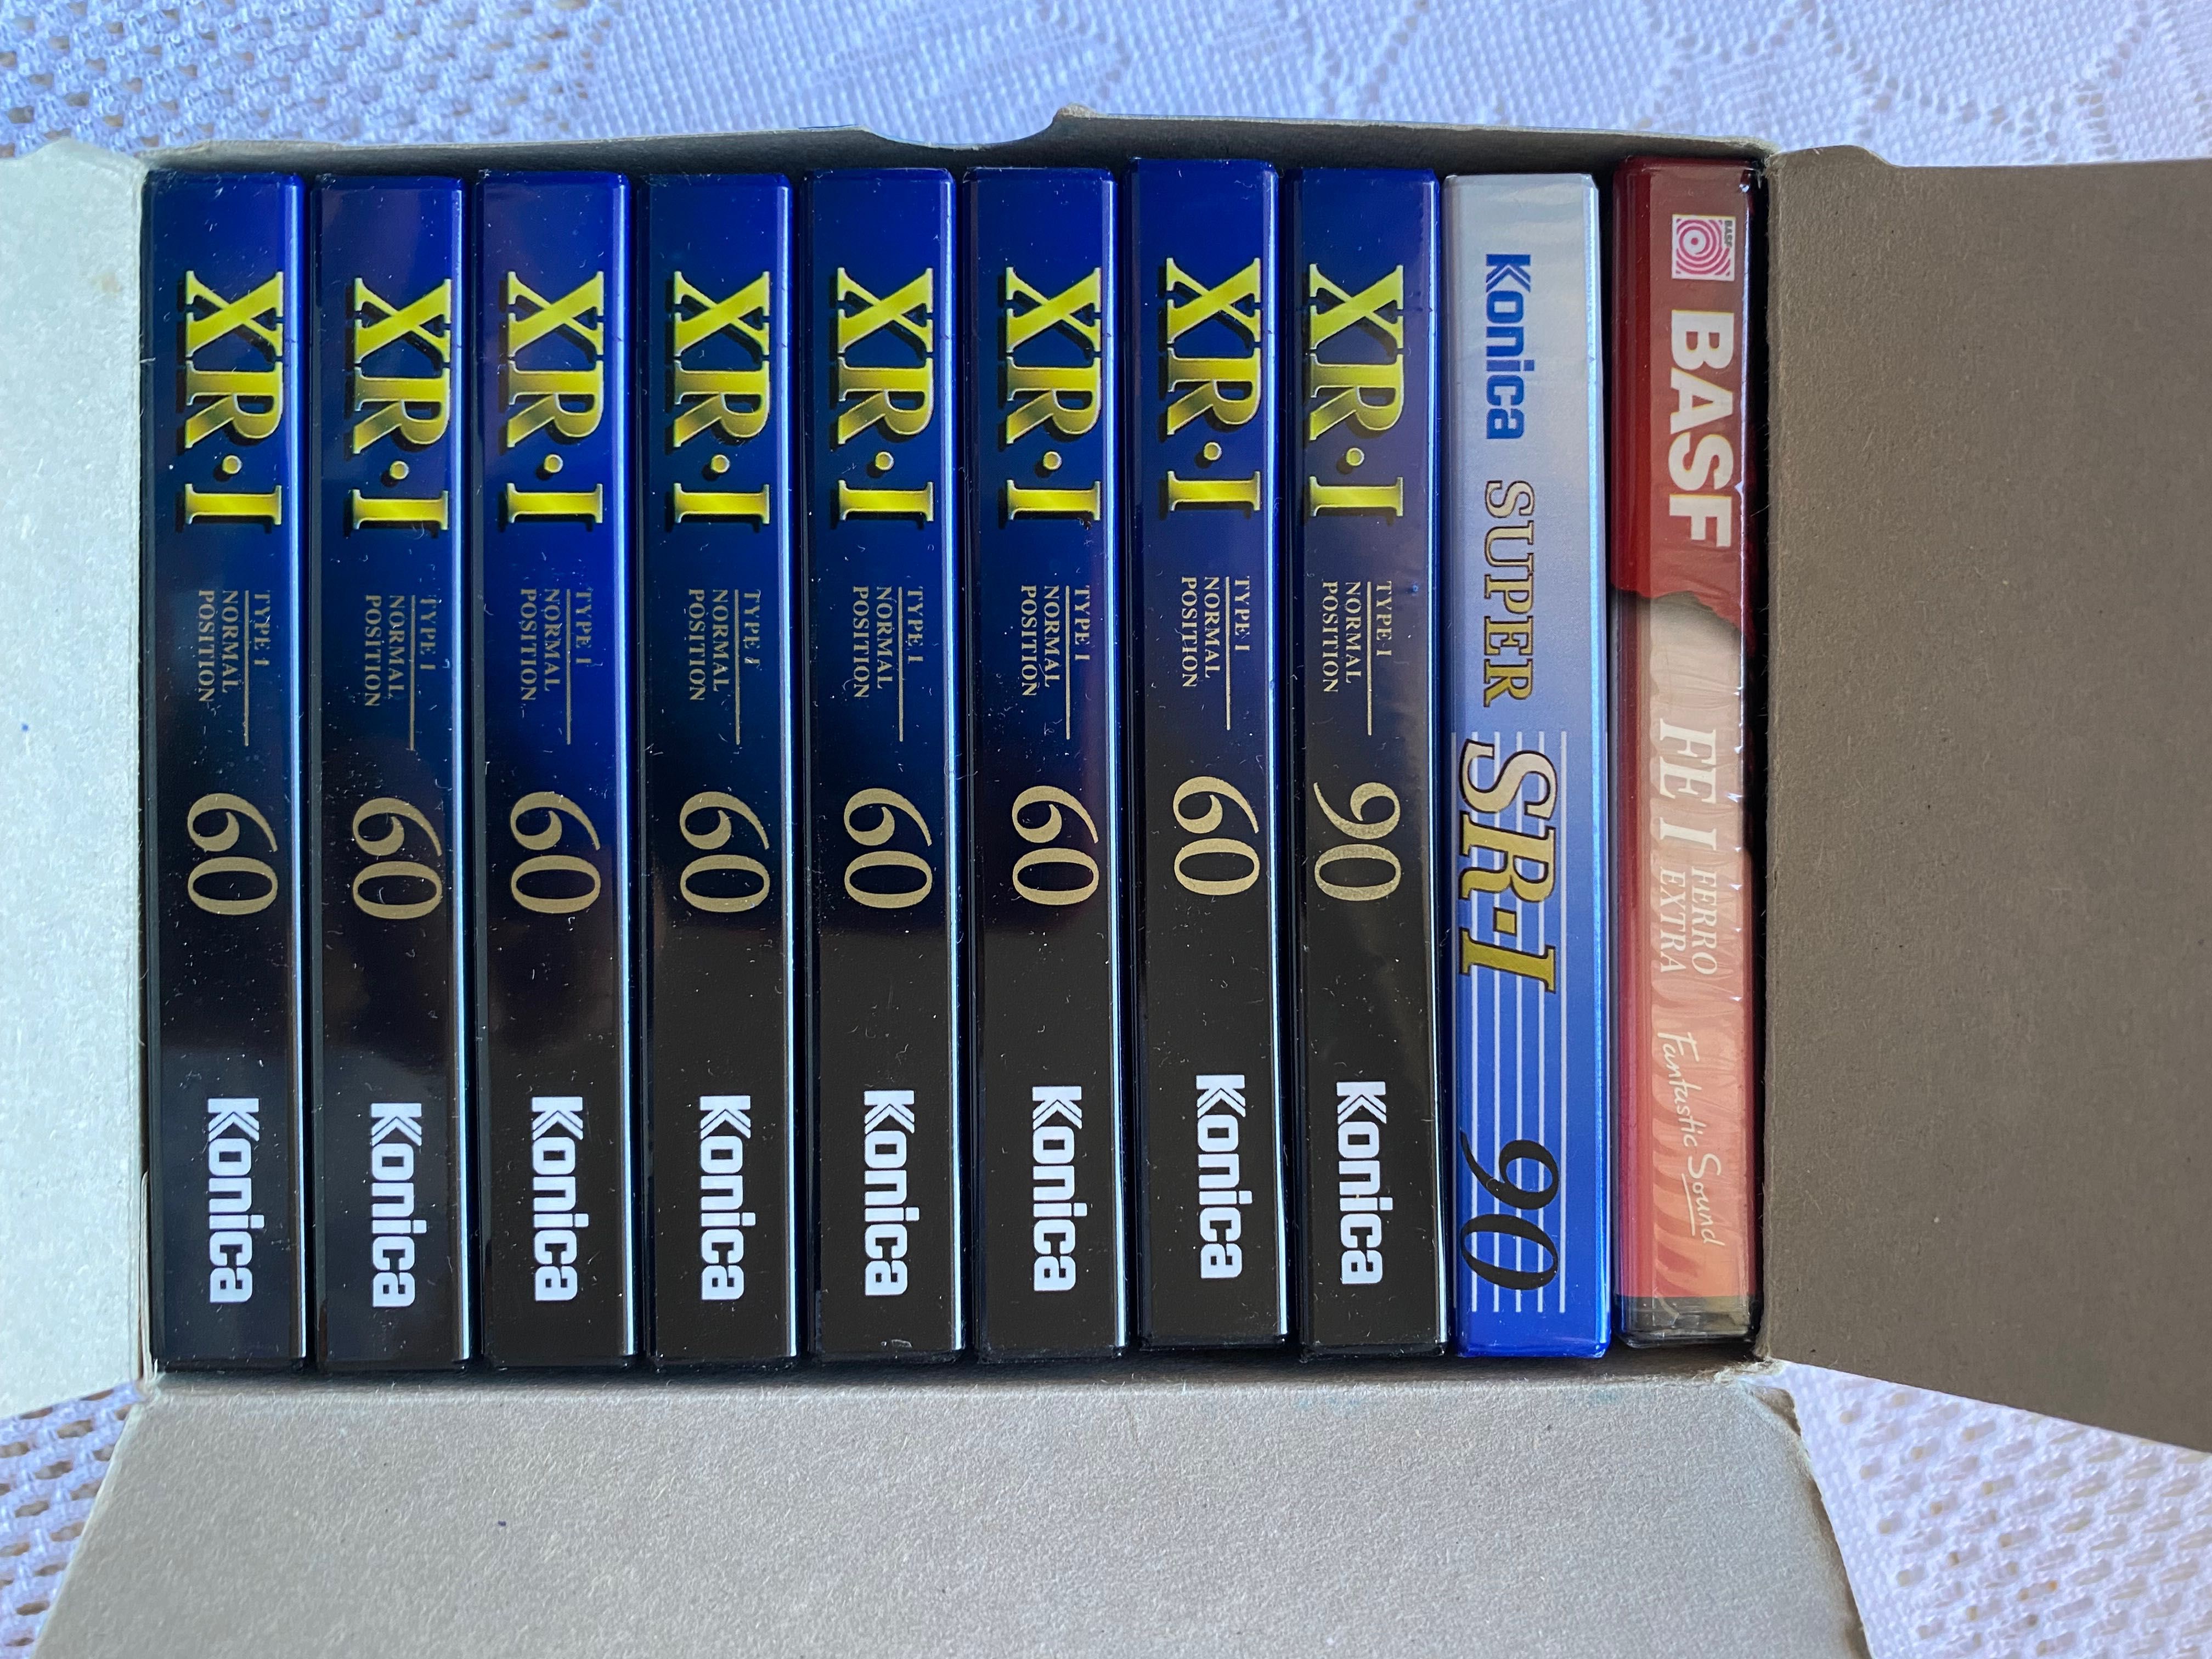 Кассеты / аудиокассеты KONICA XR-I 60 (1990г.) - Тип I